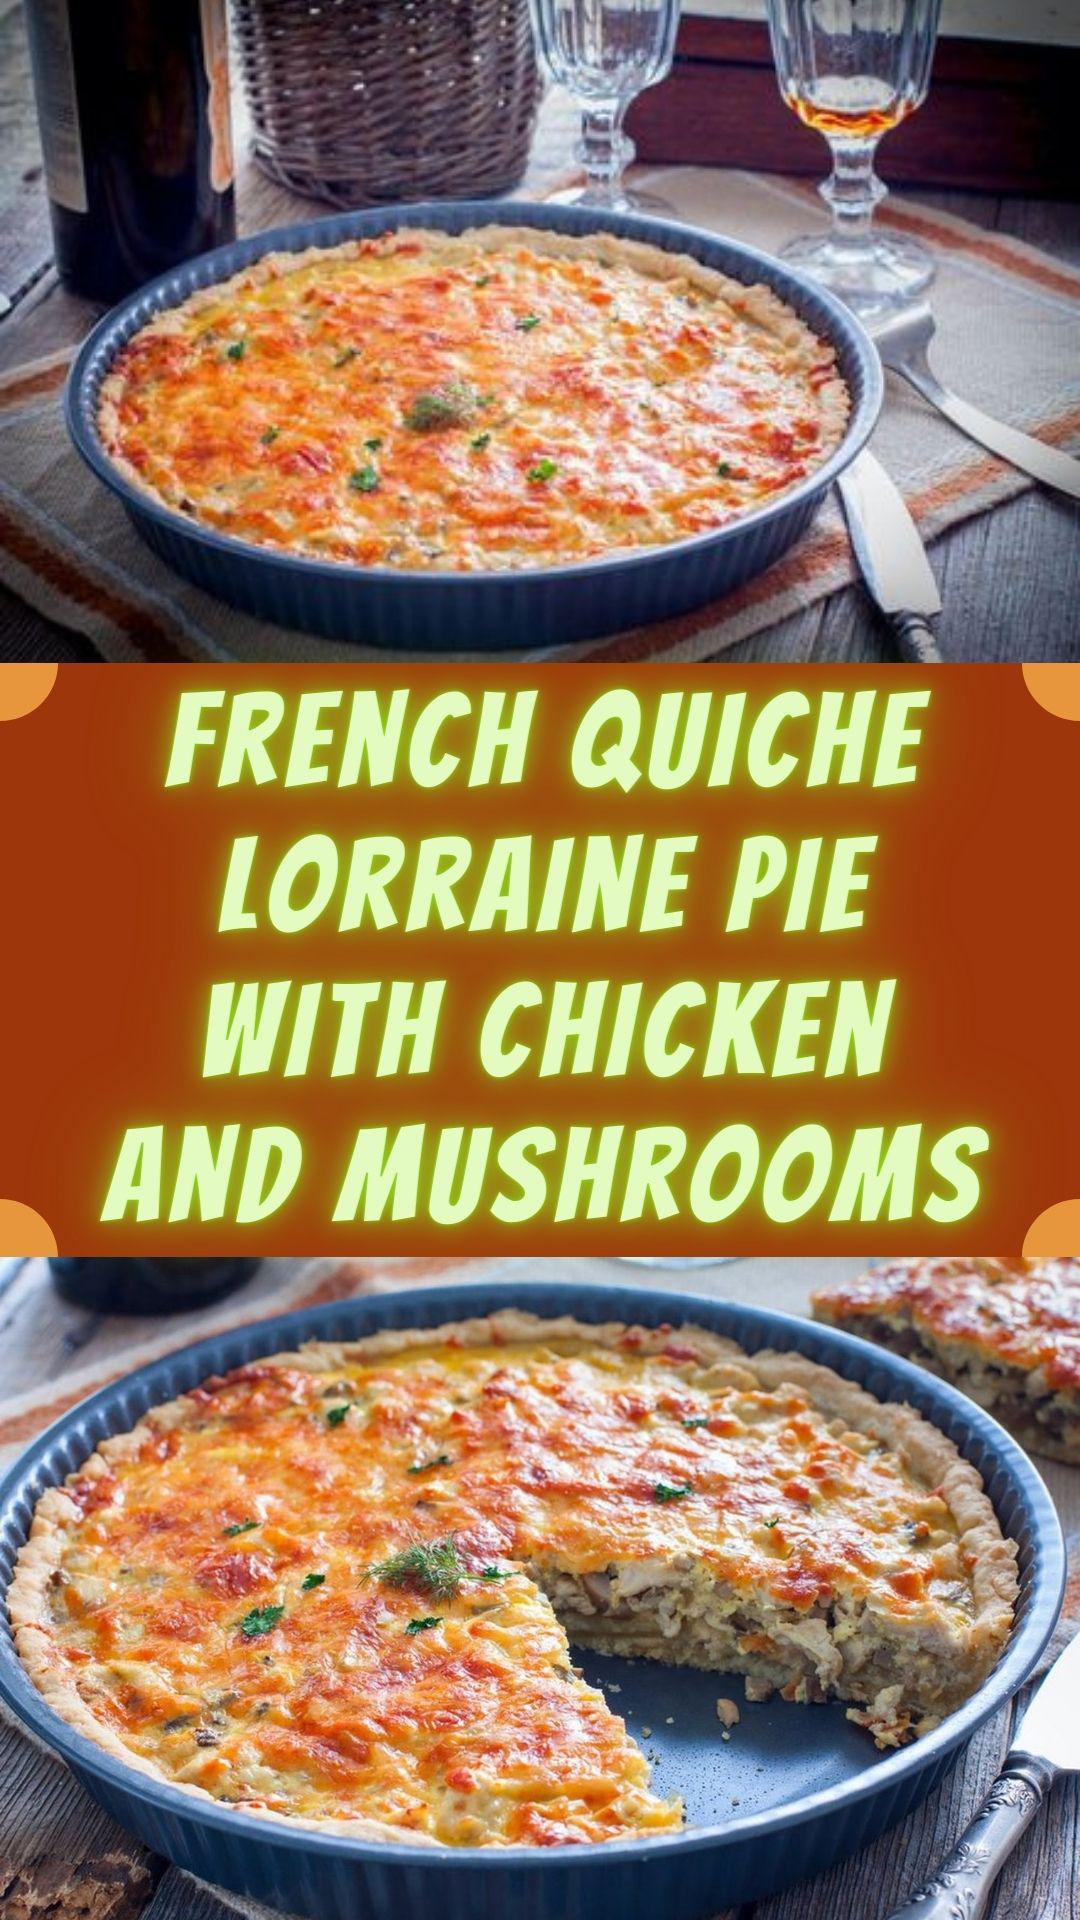 French Quiche Lorraine pie with chicken and mushrooms